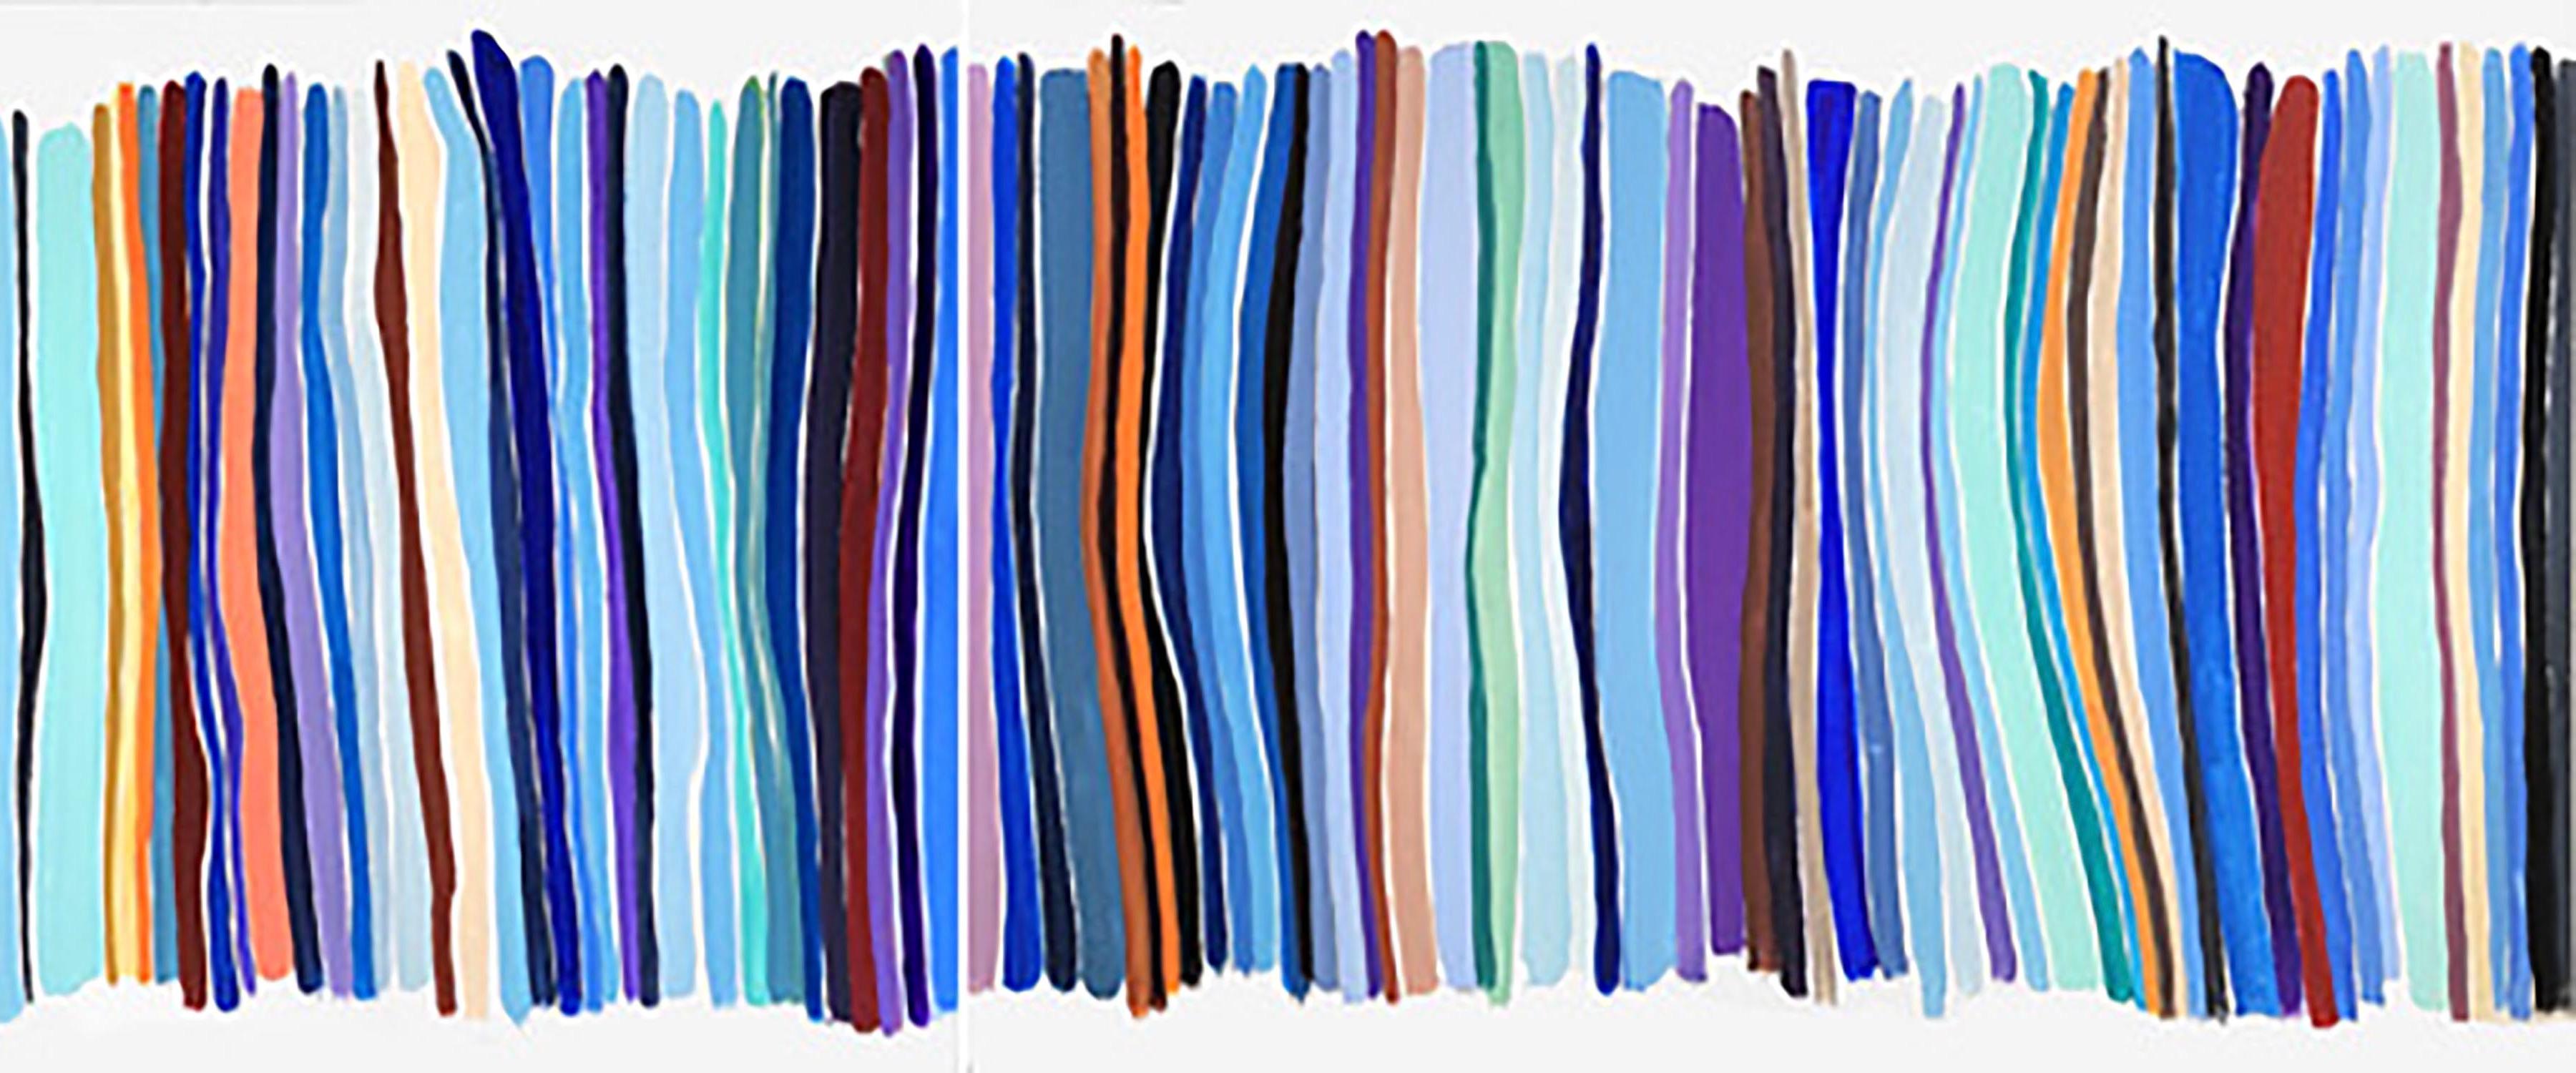 Chord Blue - Abstract Painting by John Platt